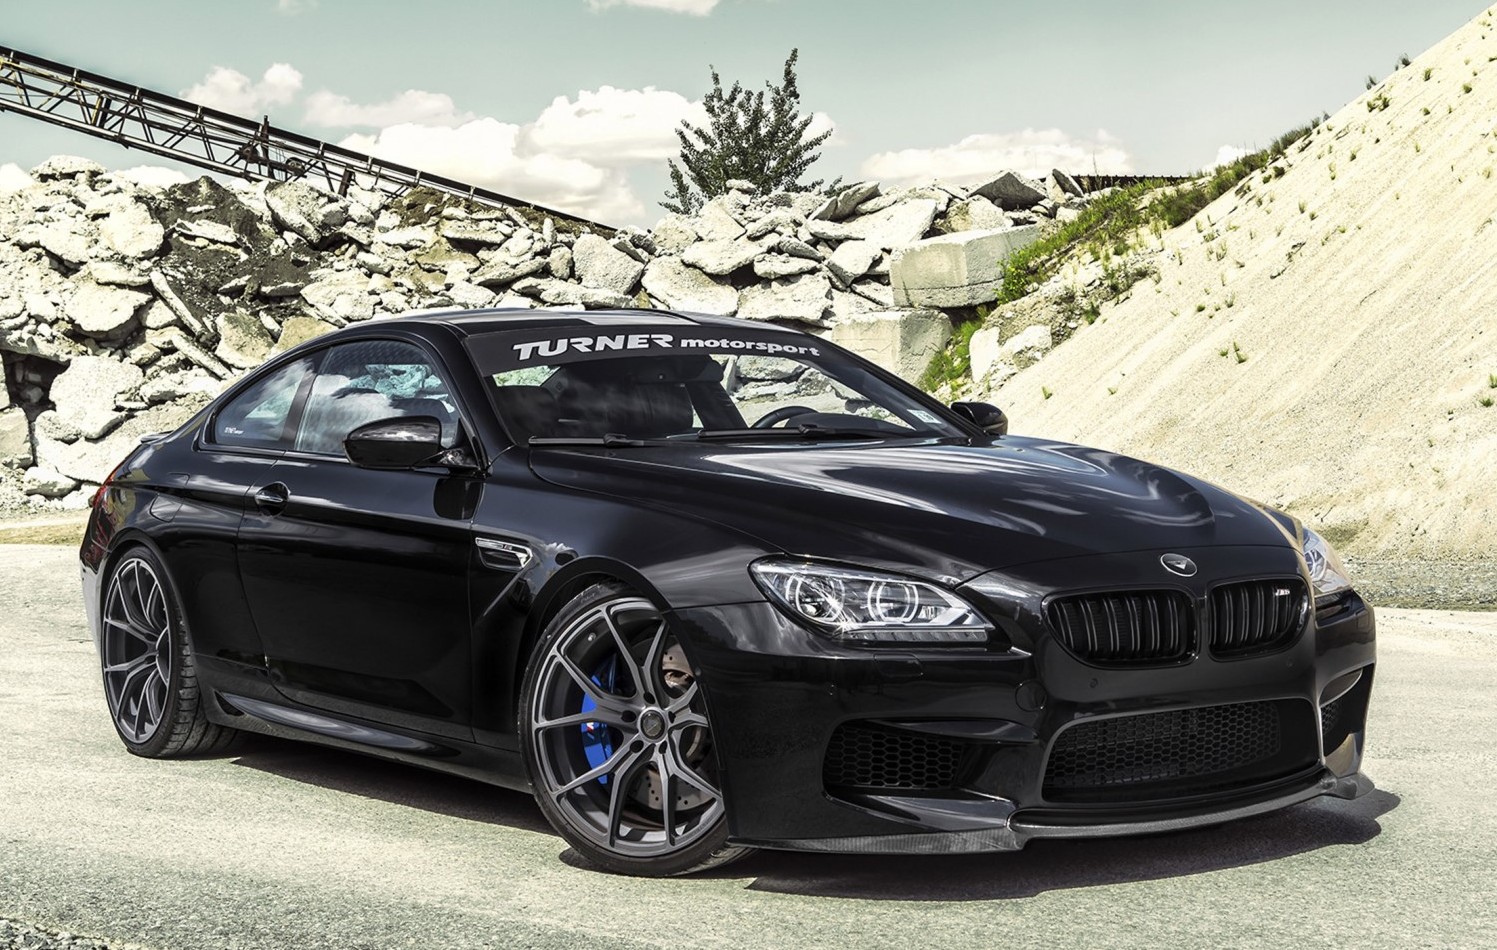 Turner Motorsport: BMW M6